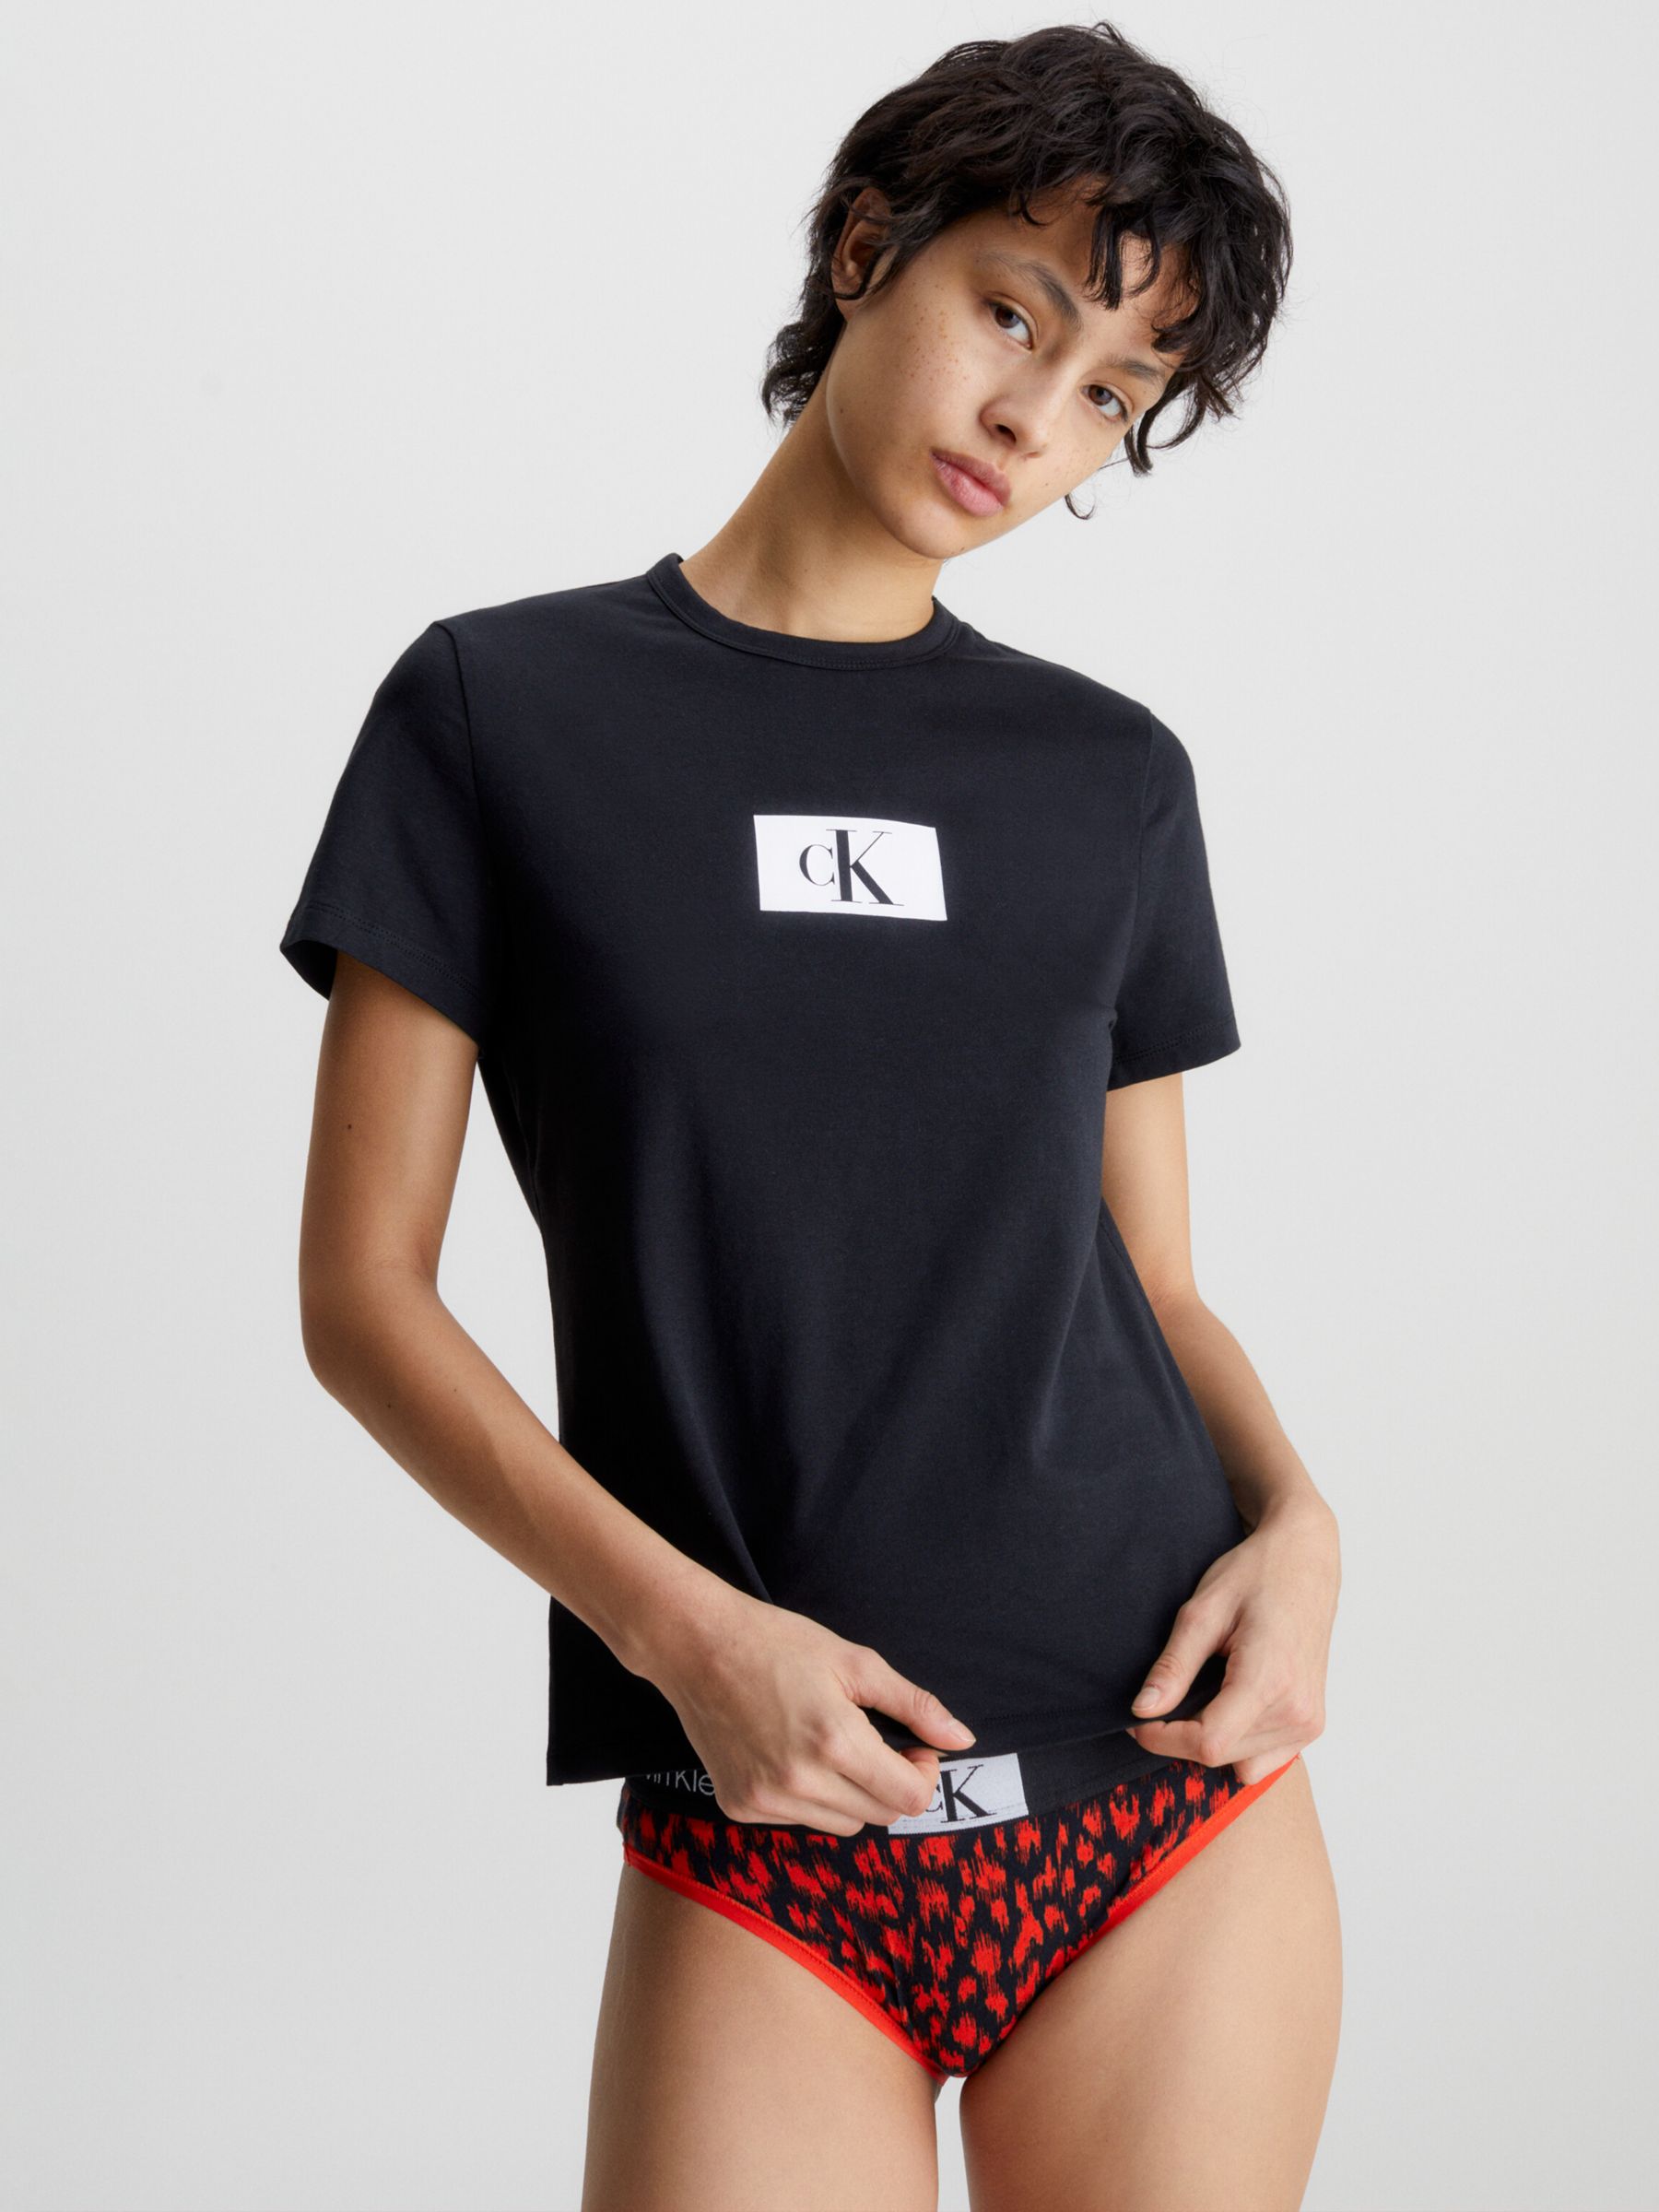 Calvin Klein Performance co-ord logo cami sports bra in black